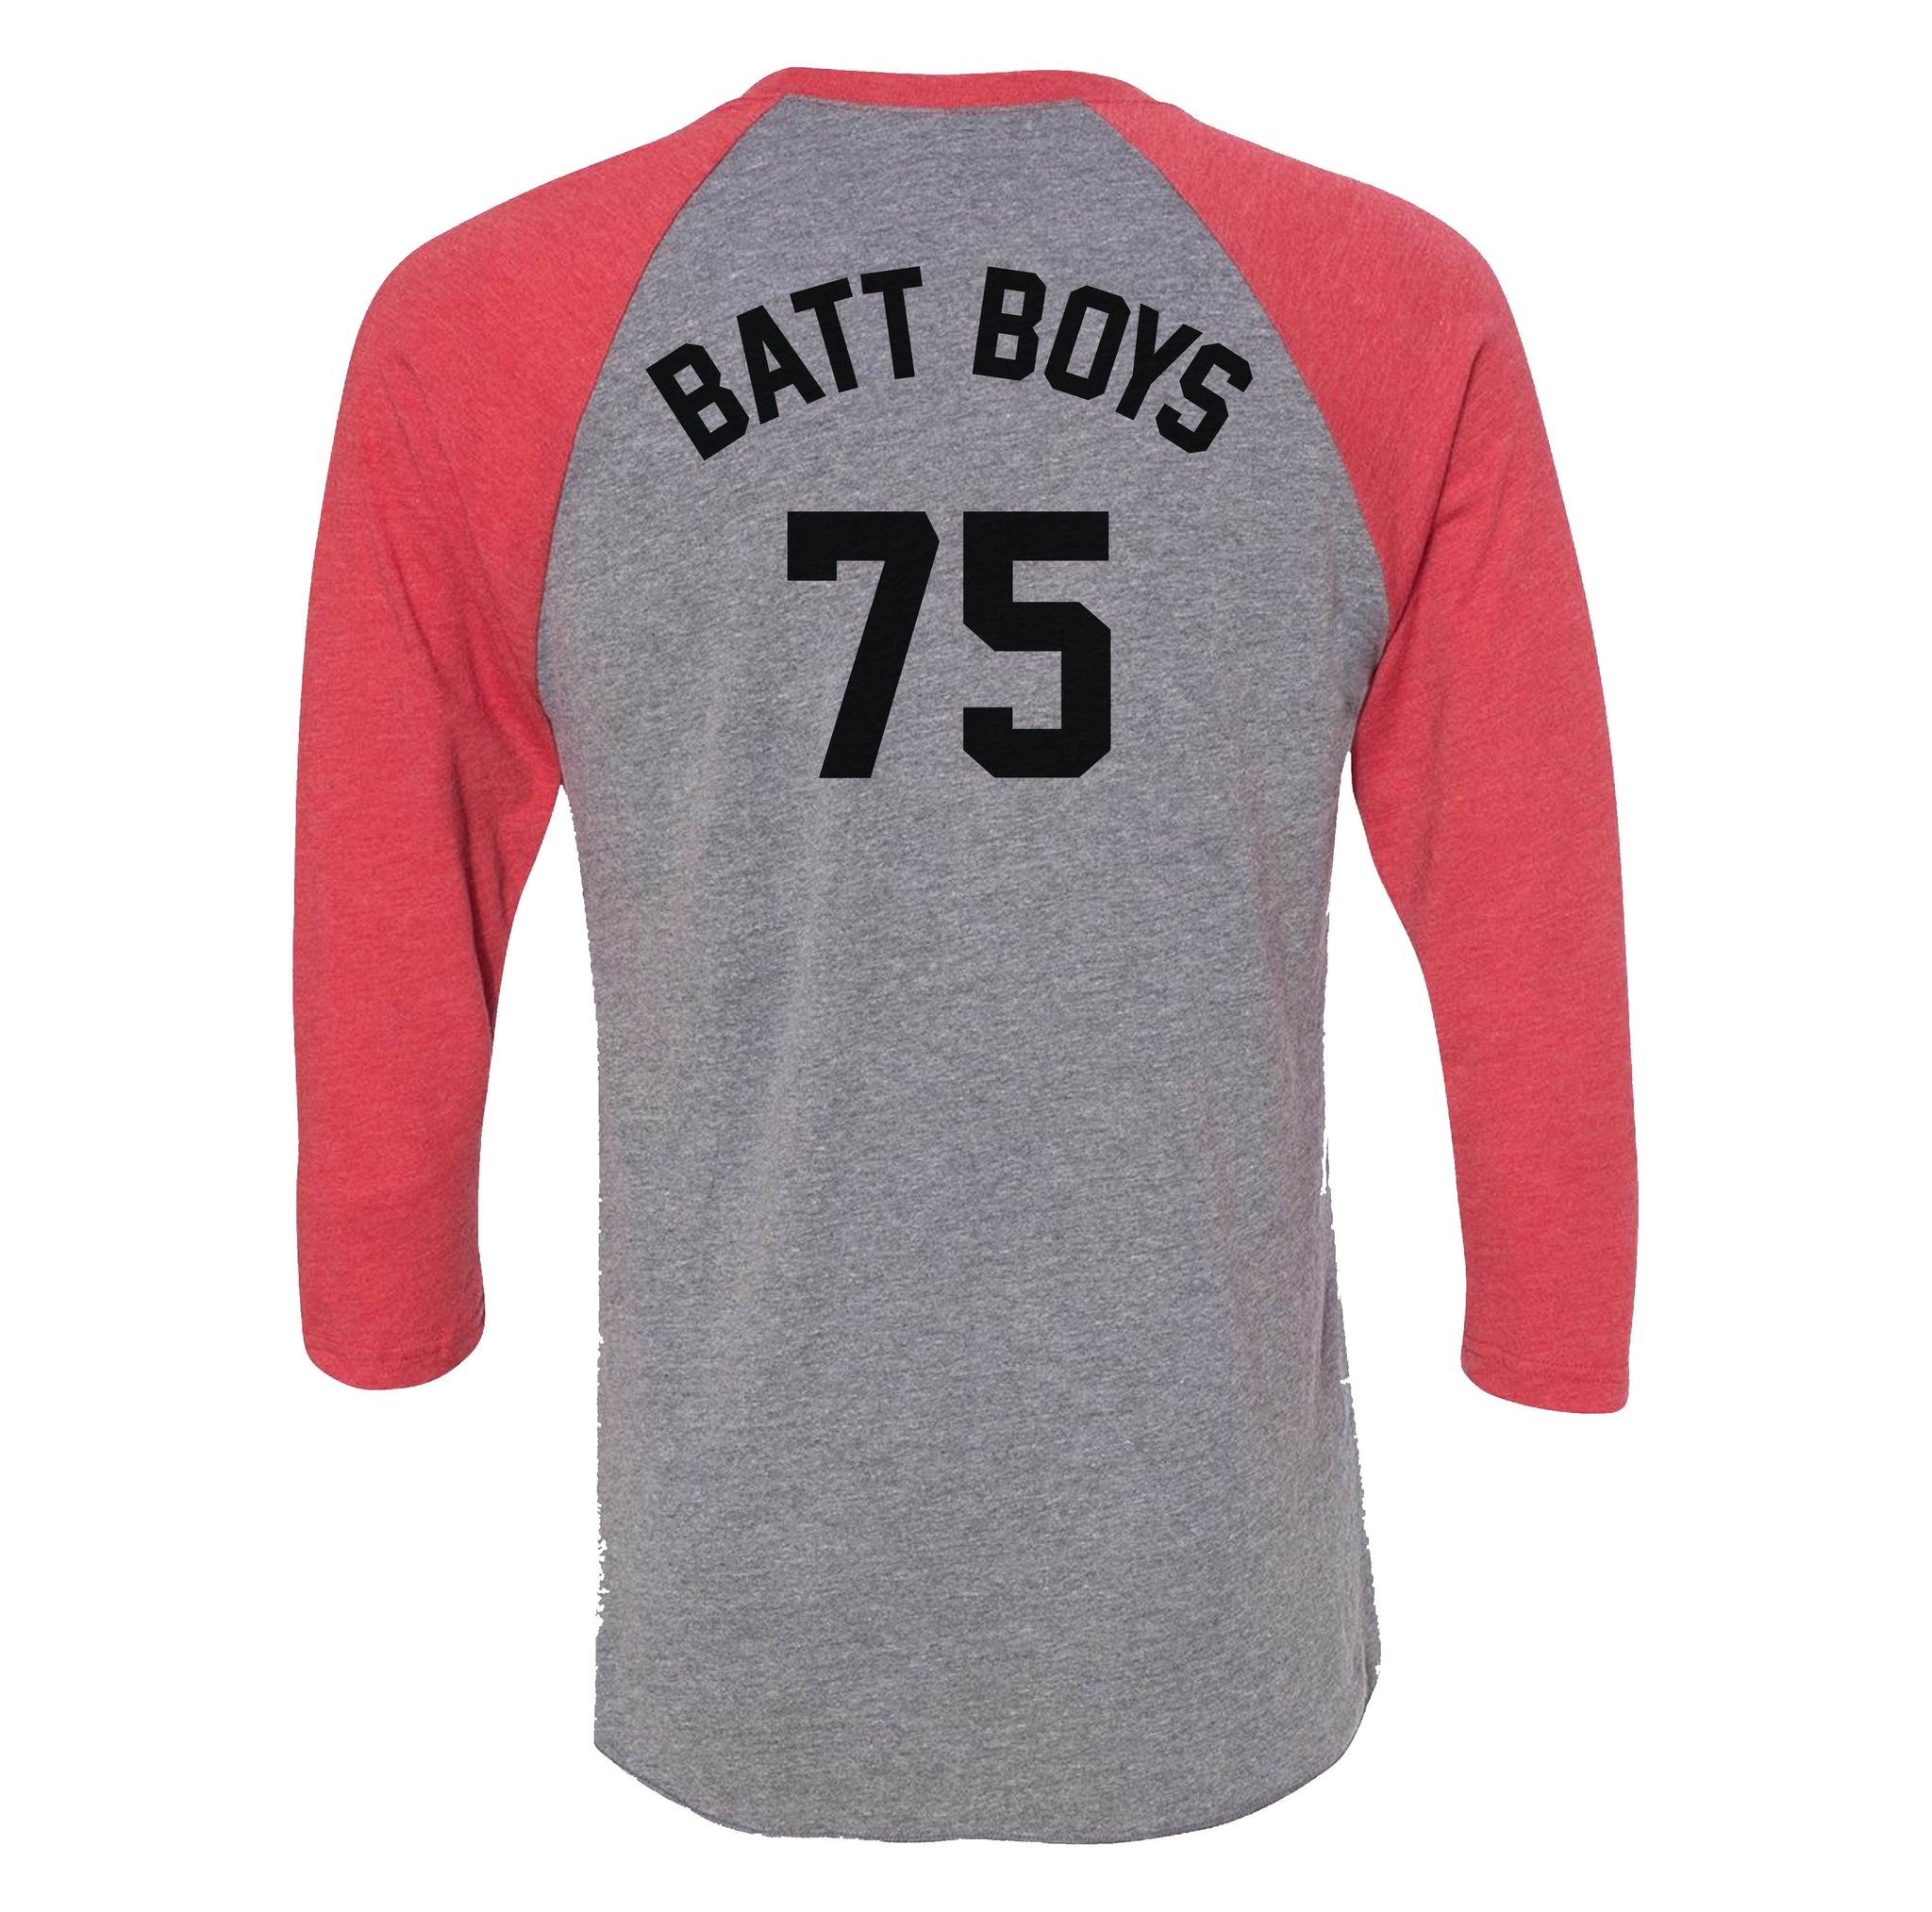 Batt Boys Raglan 3/4 Sleeve Shirt